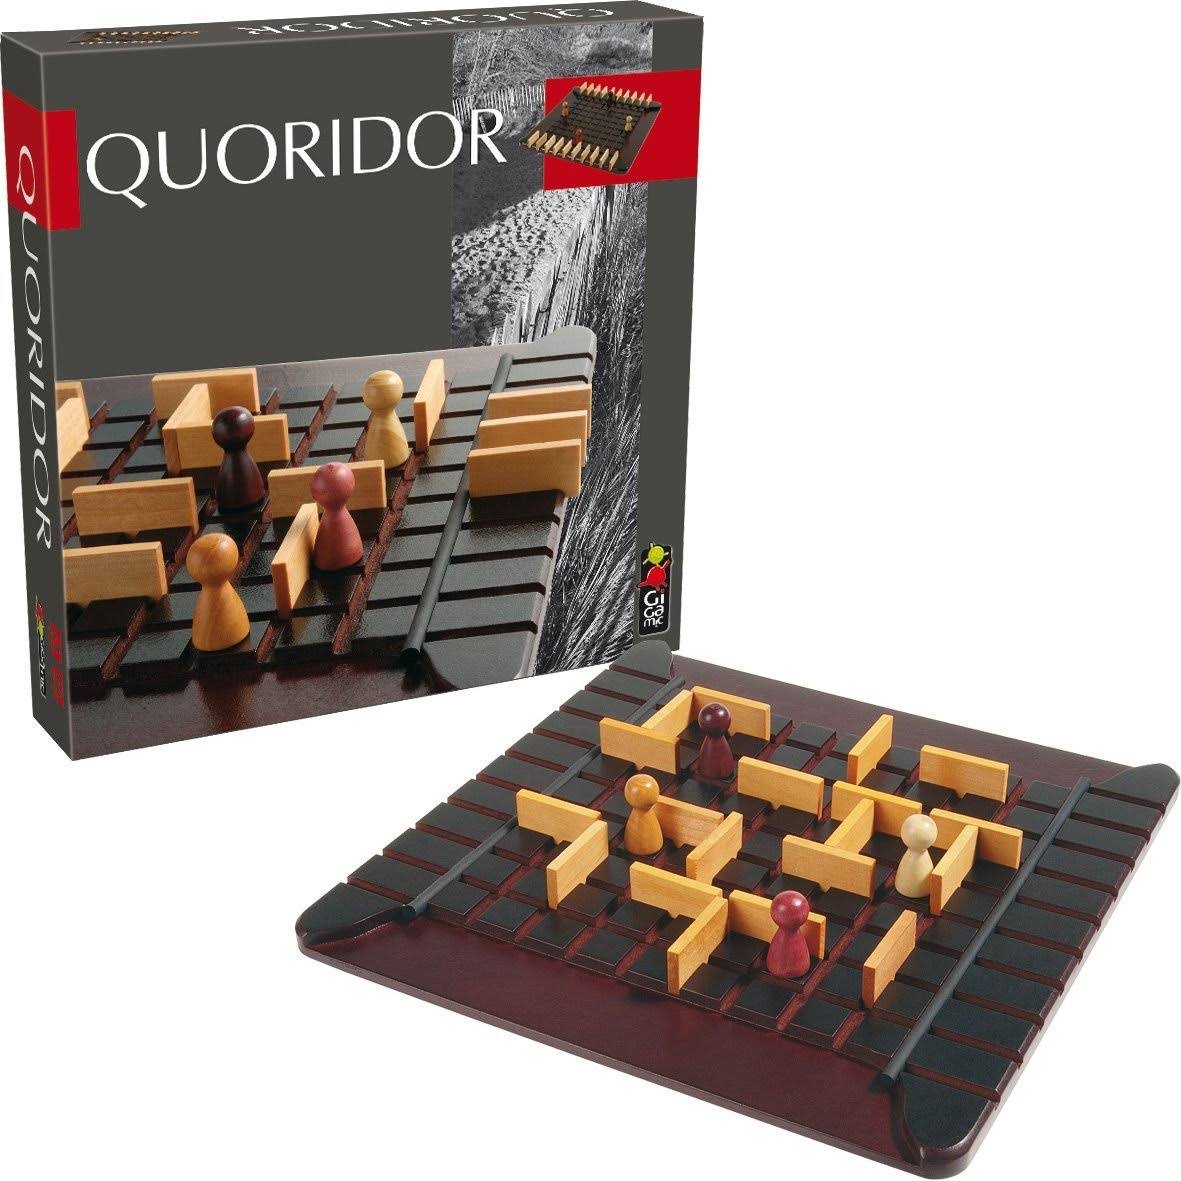 Gigamic Quoridor Classic Game